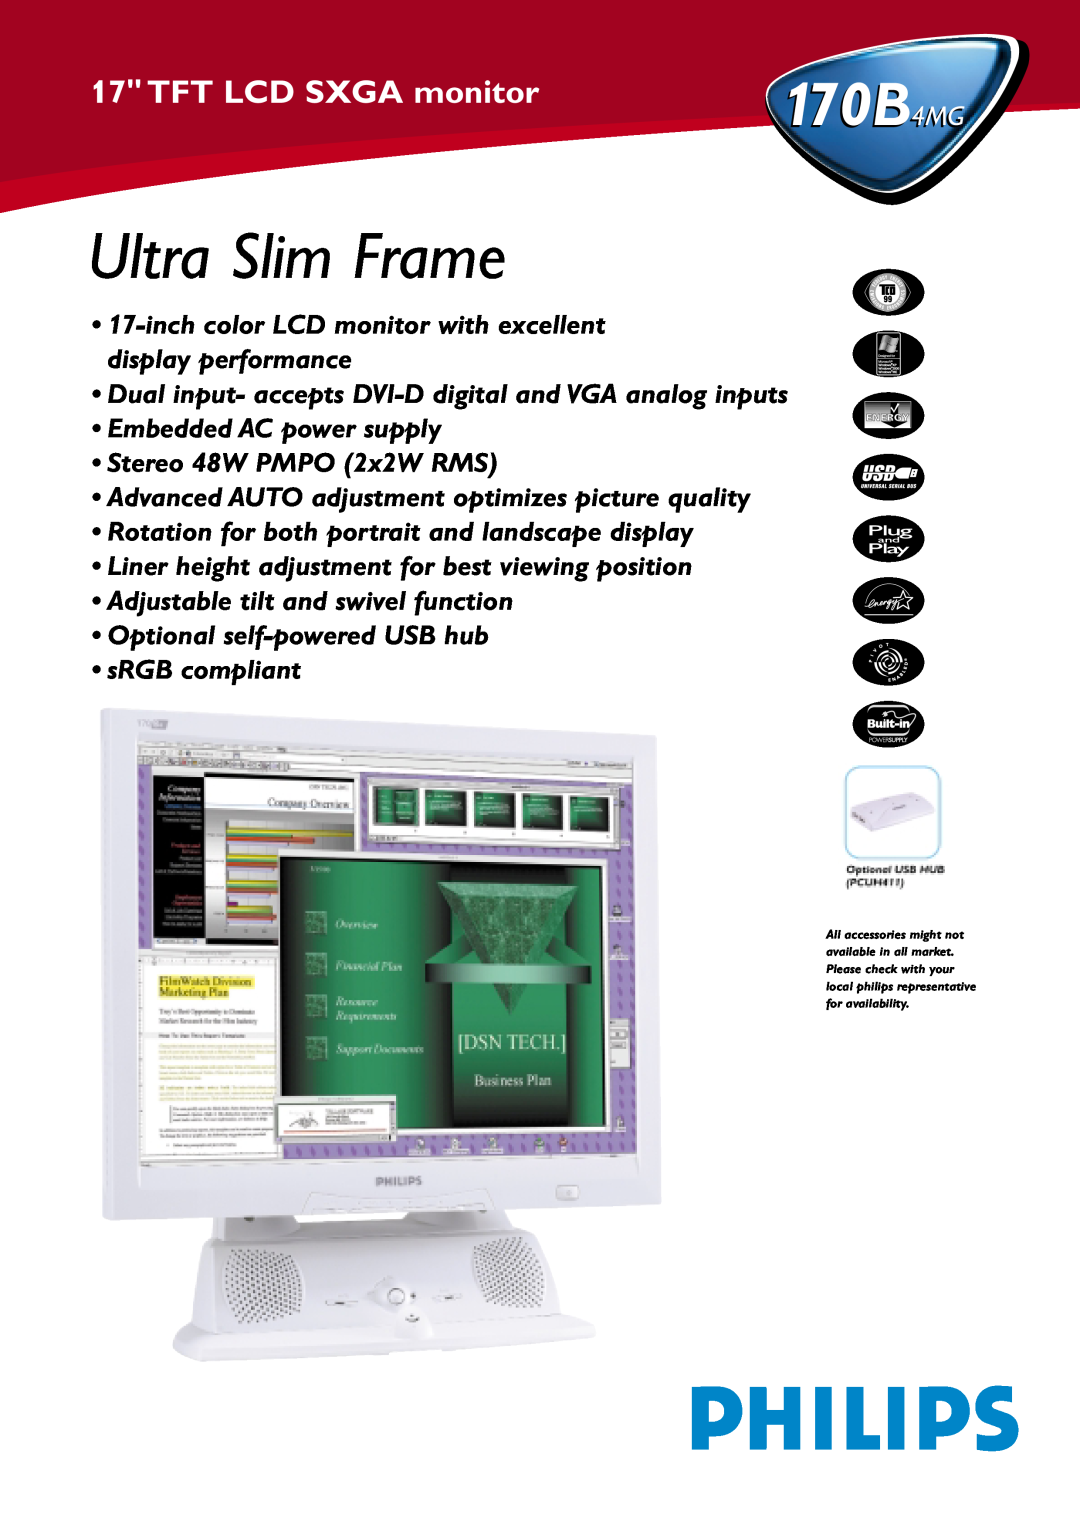 Philips 170B4MG manual Ultra Slim Frame, TFT LCD SXGA monitor 